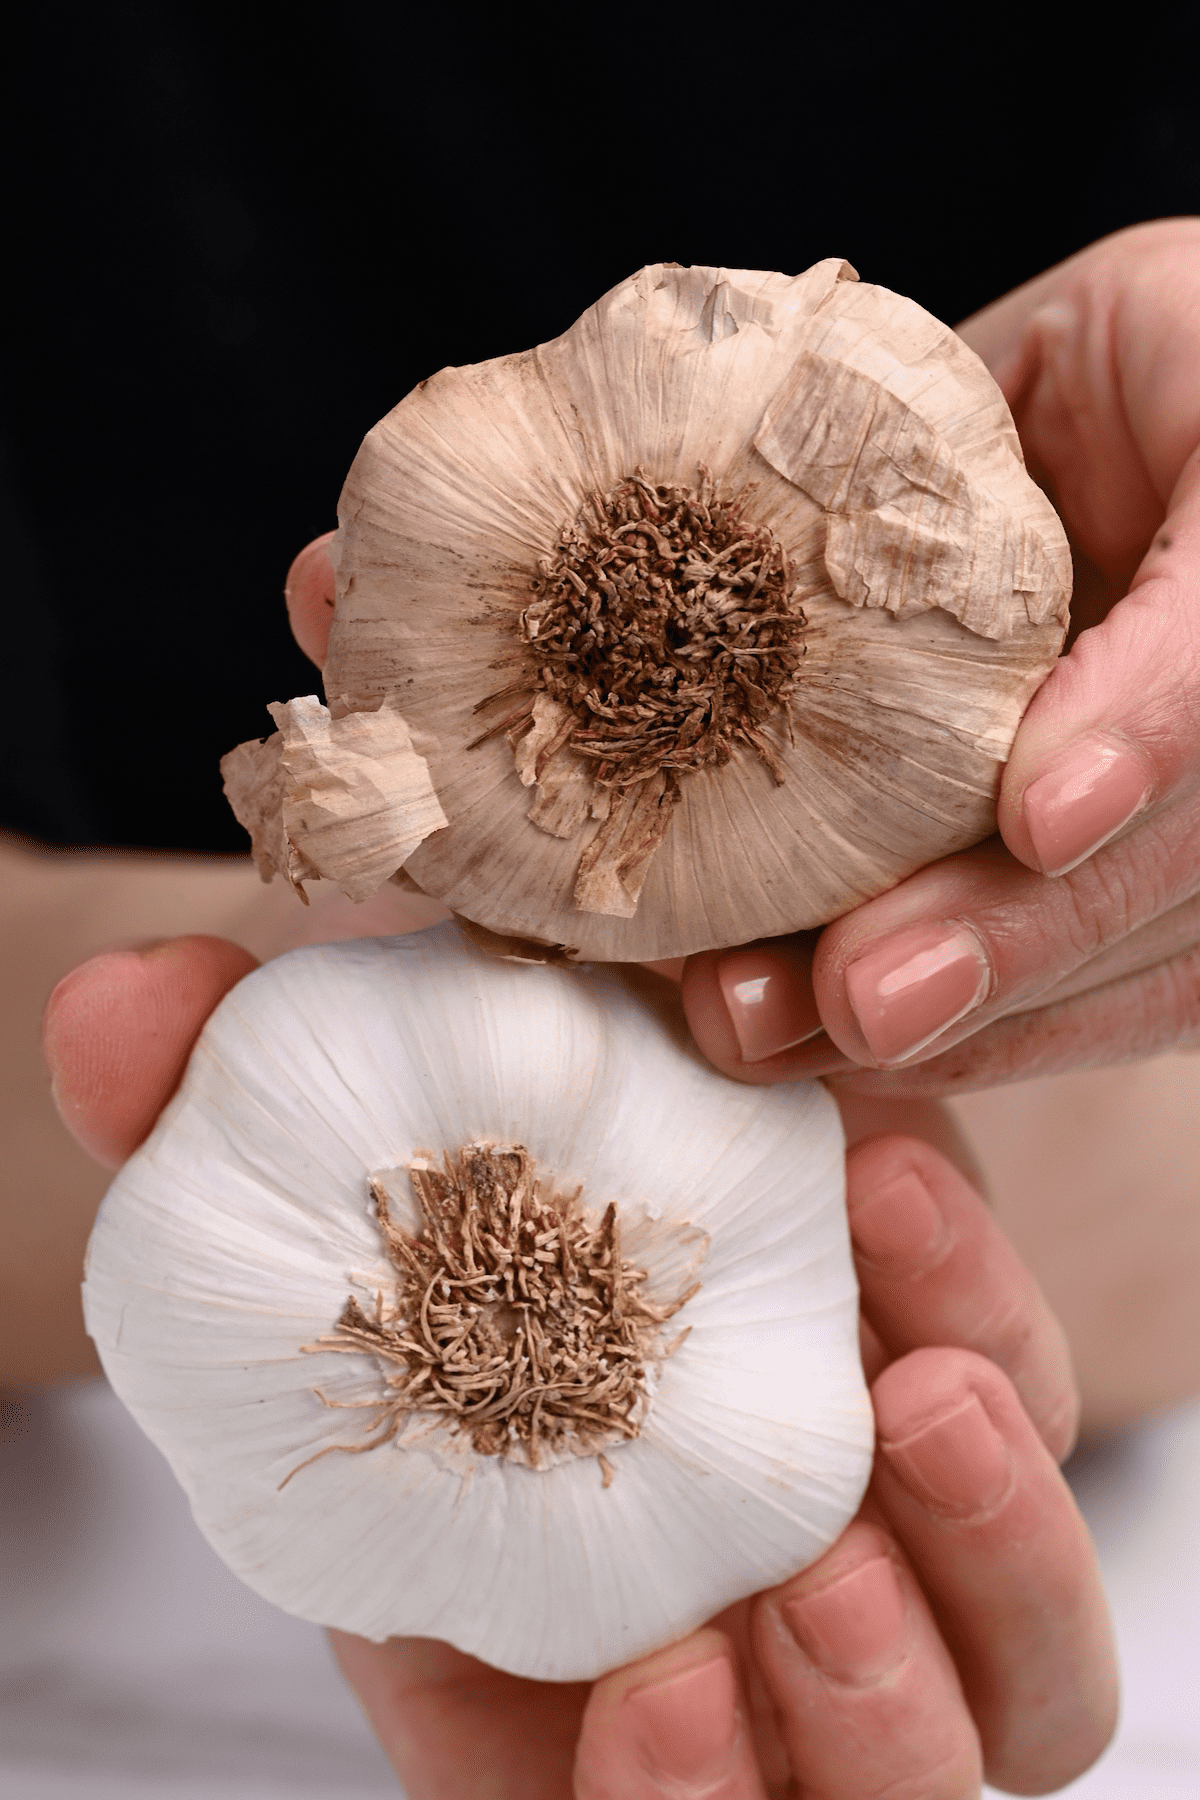 A head of black garlic and a head of white garlic